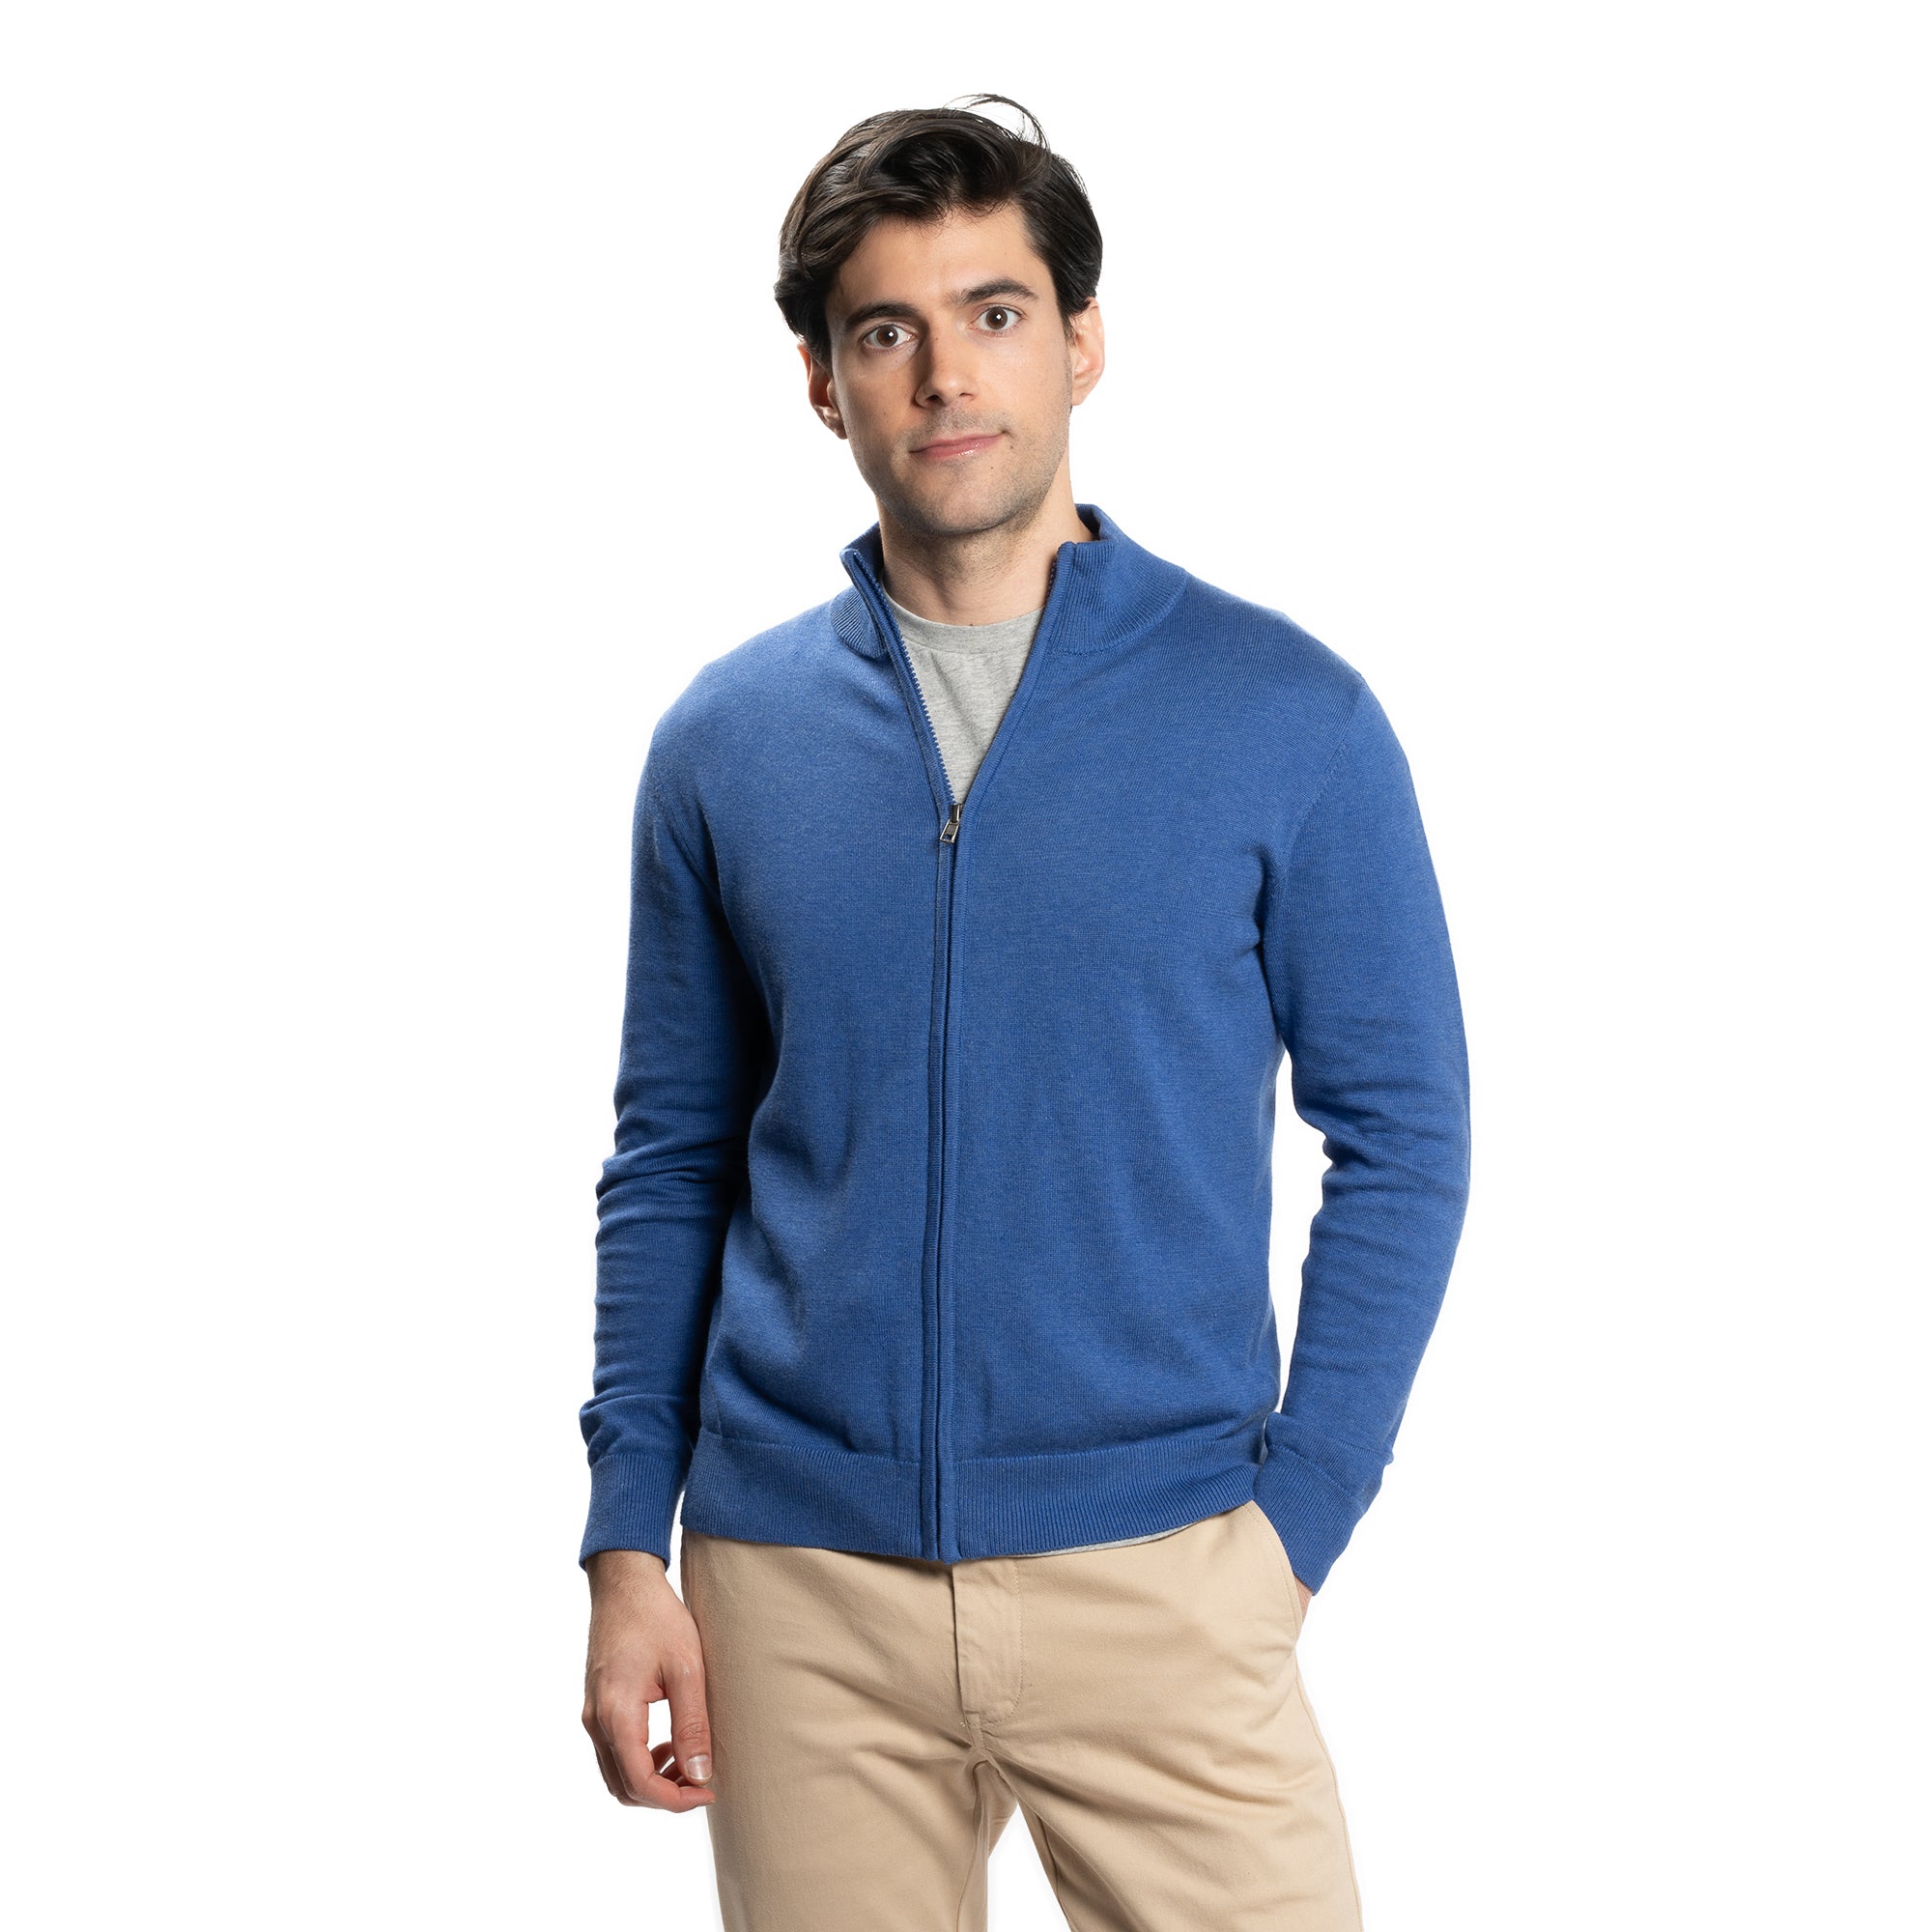 Pima Cotton Zip Sweater - Denim